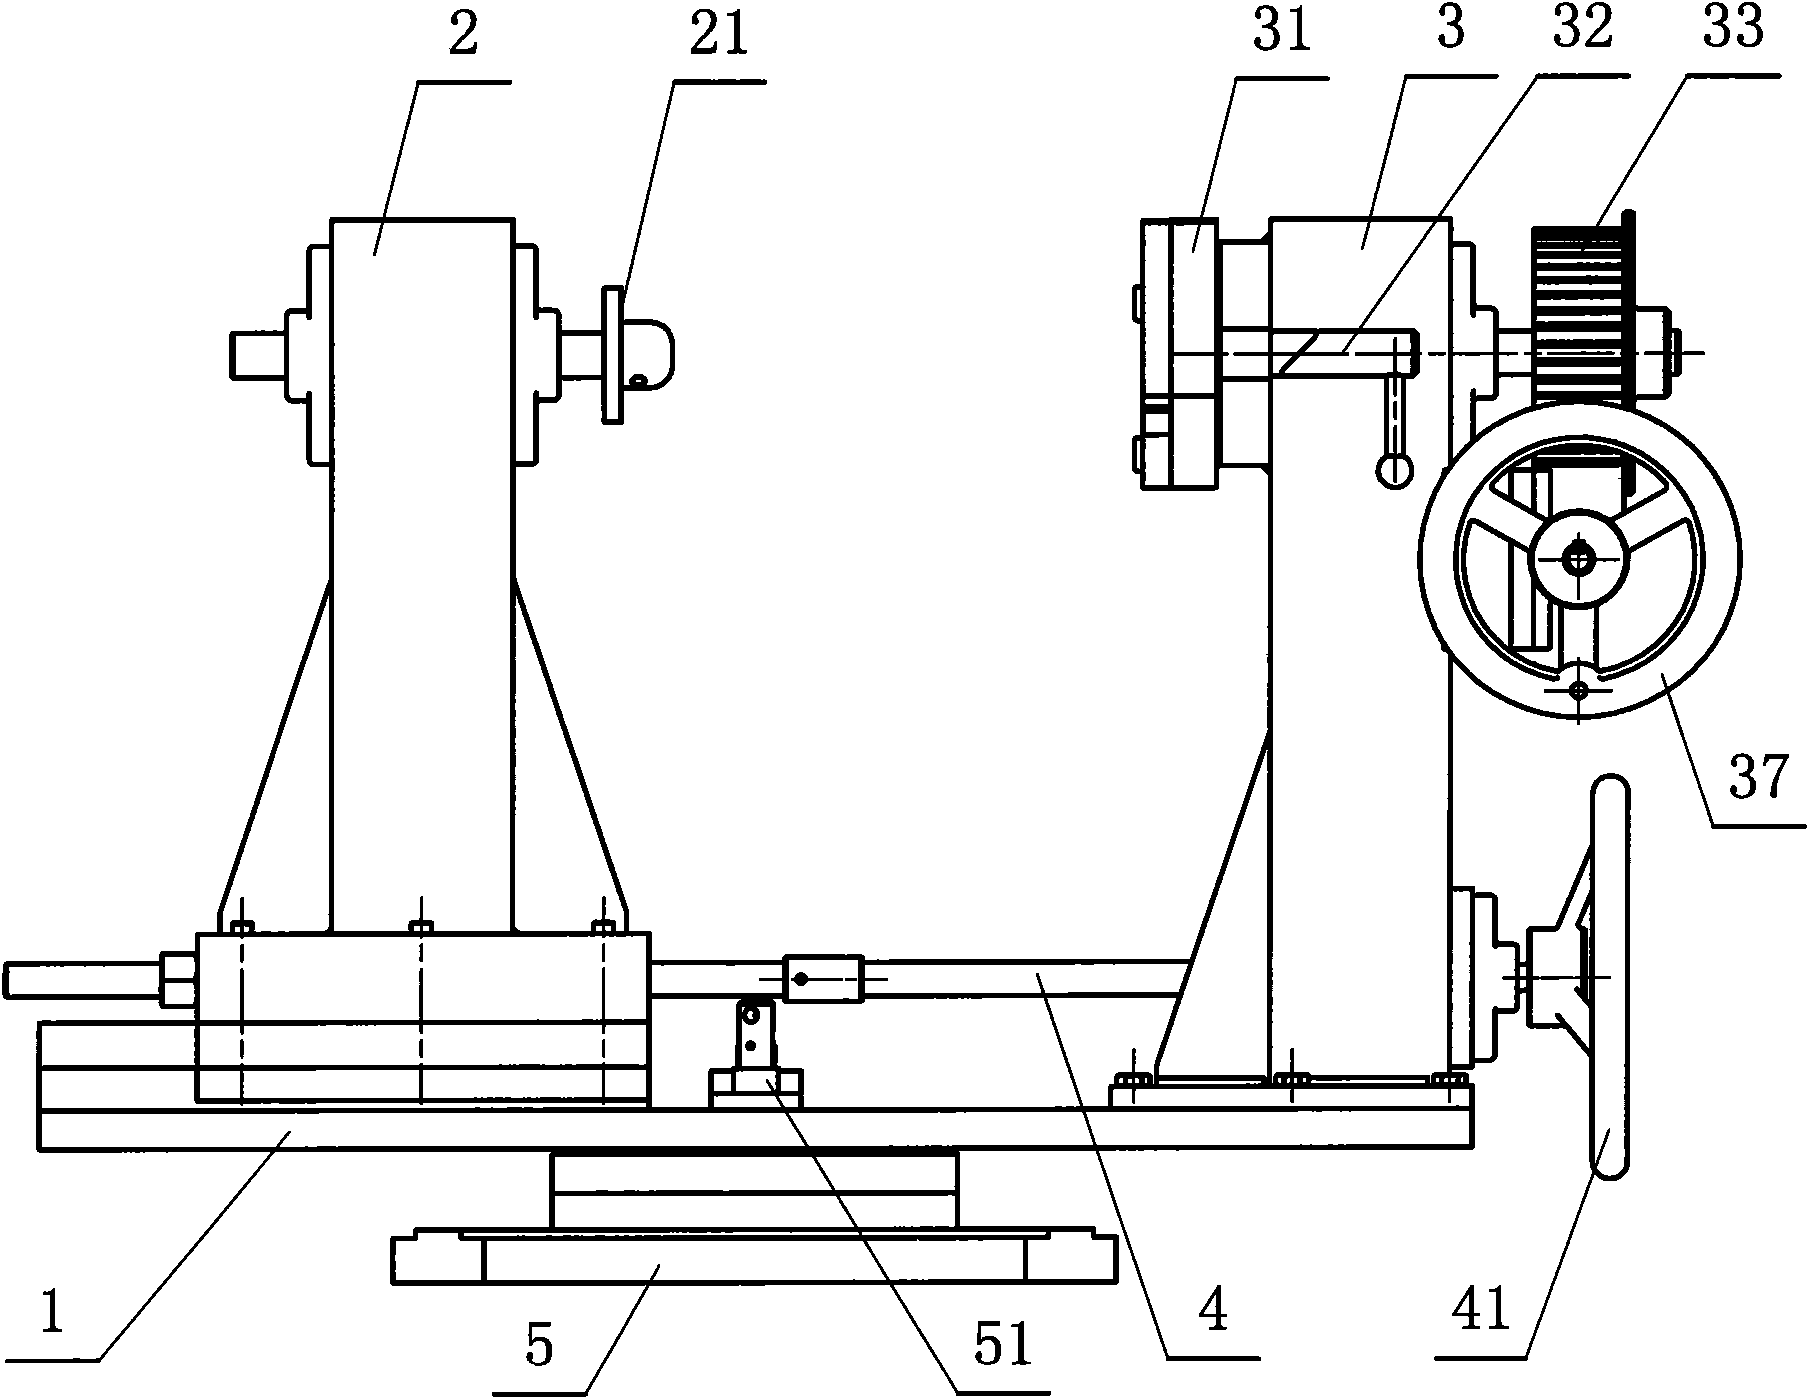 Semi-automatic mounting pump tooling platform